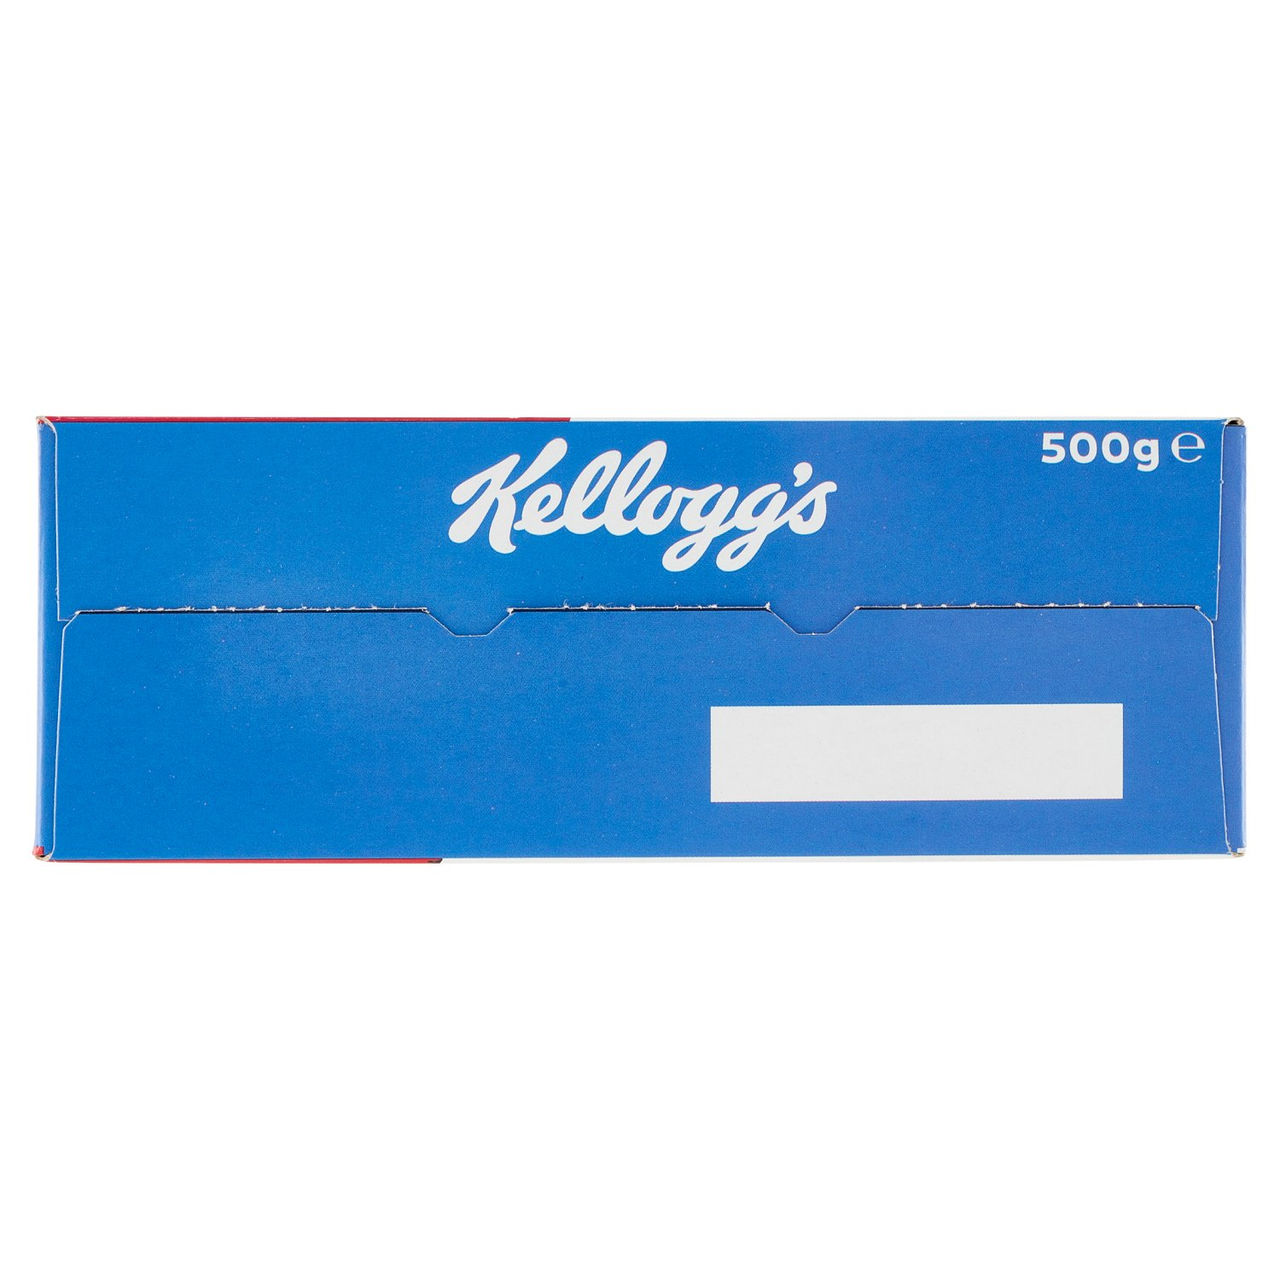 Kellogg's Special K Classic 500 g